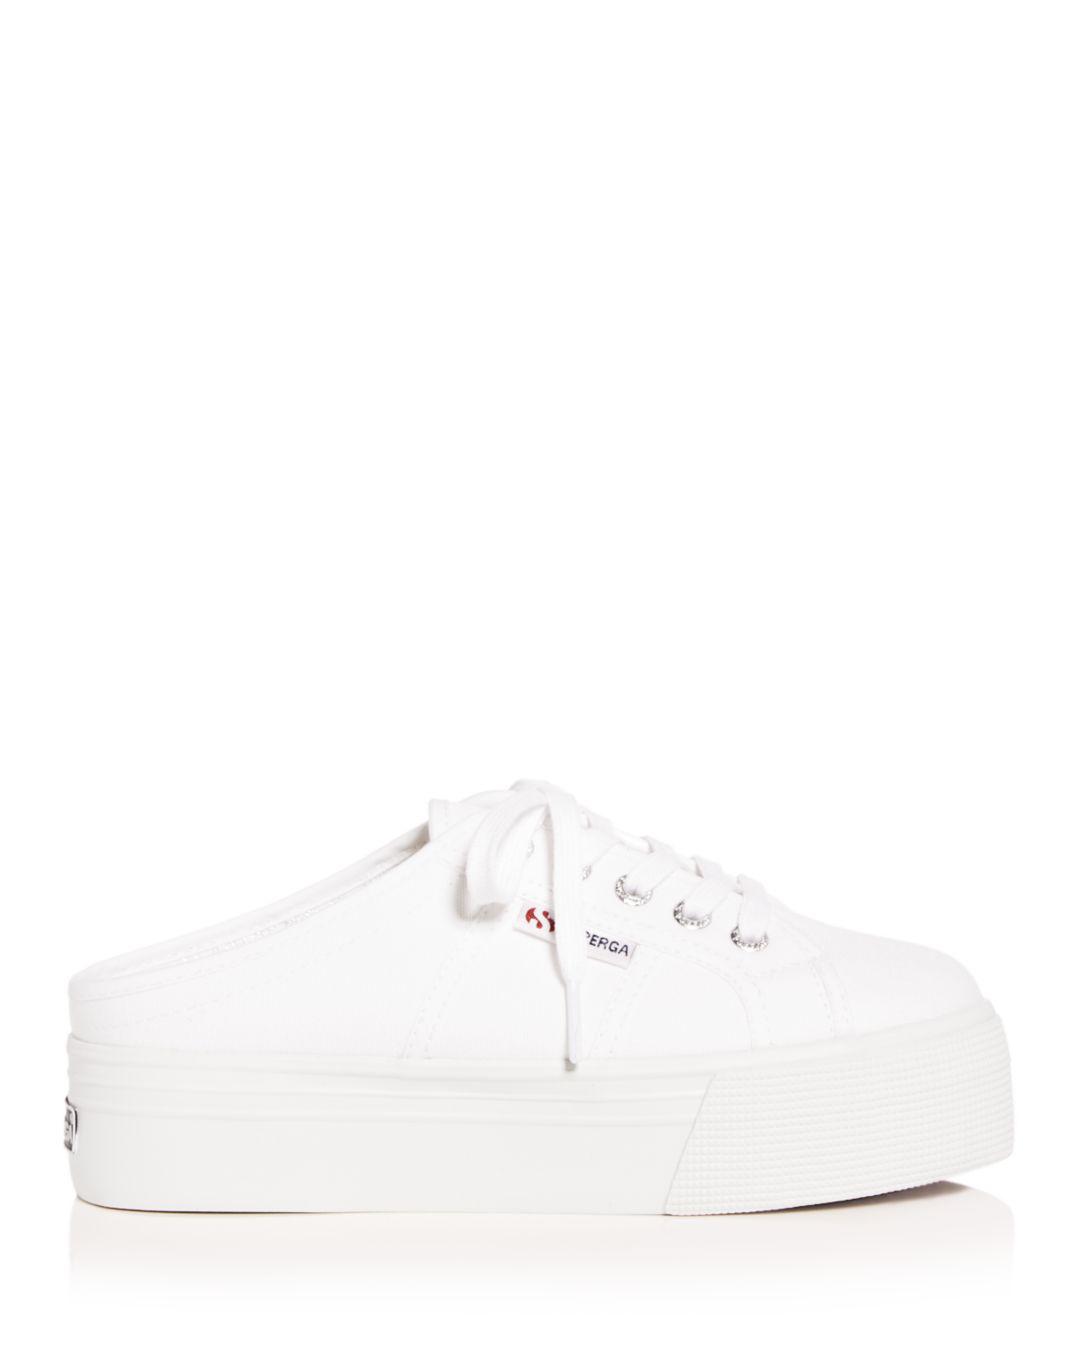 Superga Women's Platform Sneaker Mules in White | Lyst